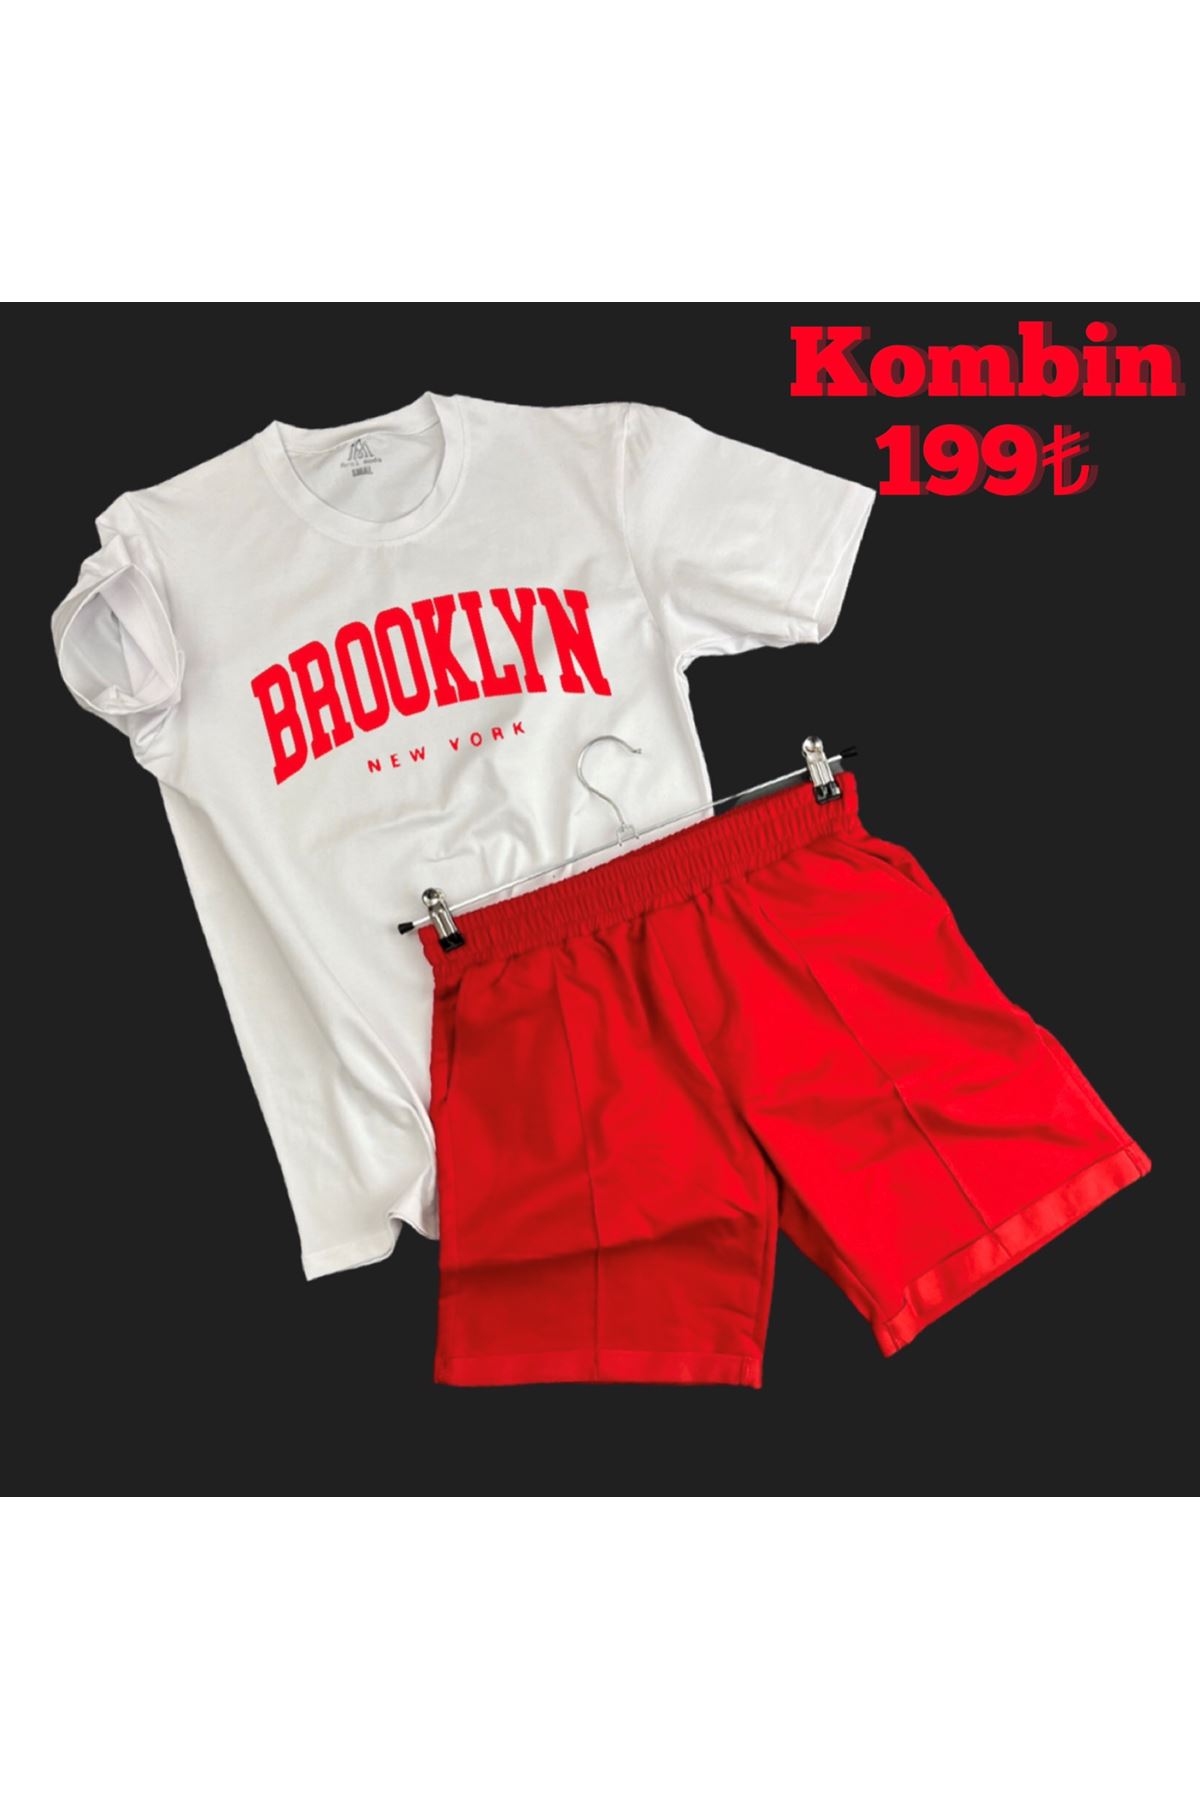 Brooklyn kırmızı kombin  